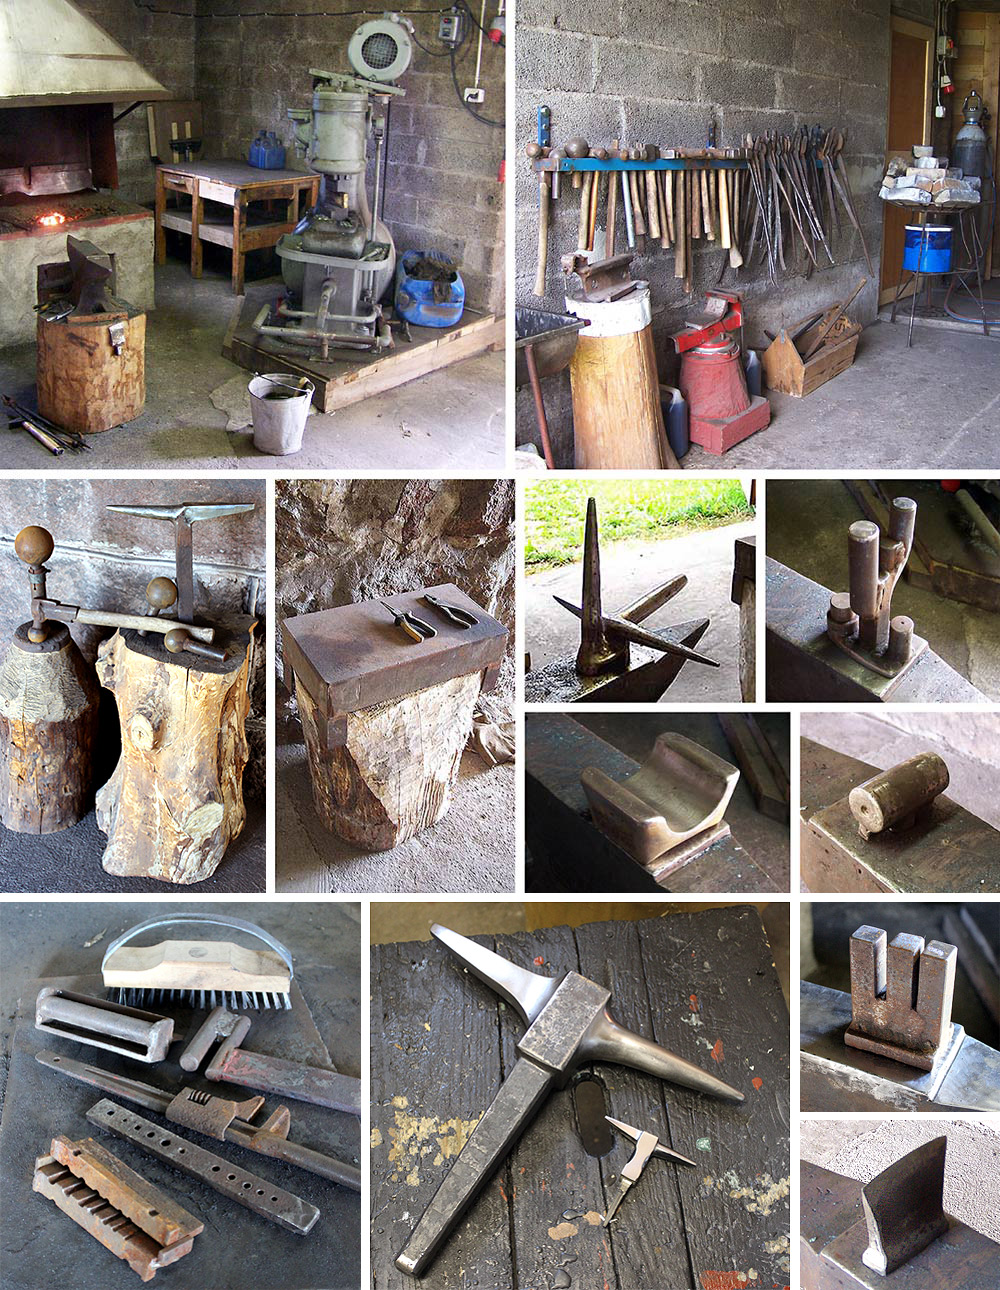 Blacksmith tools